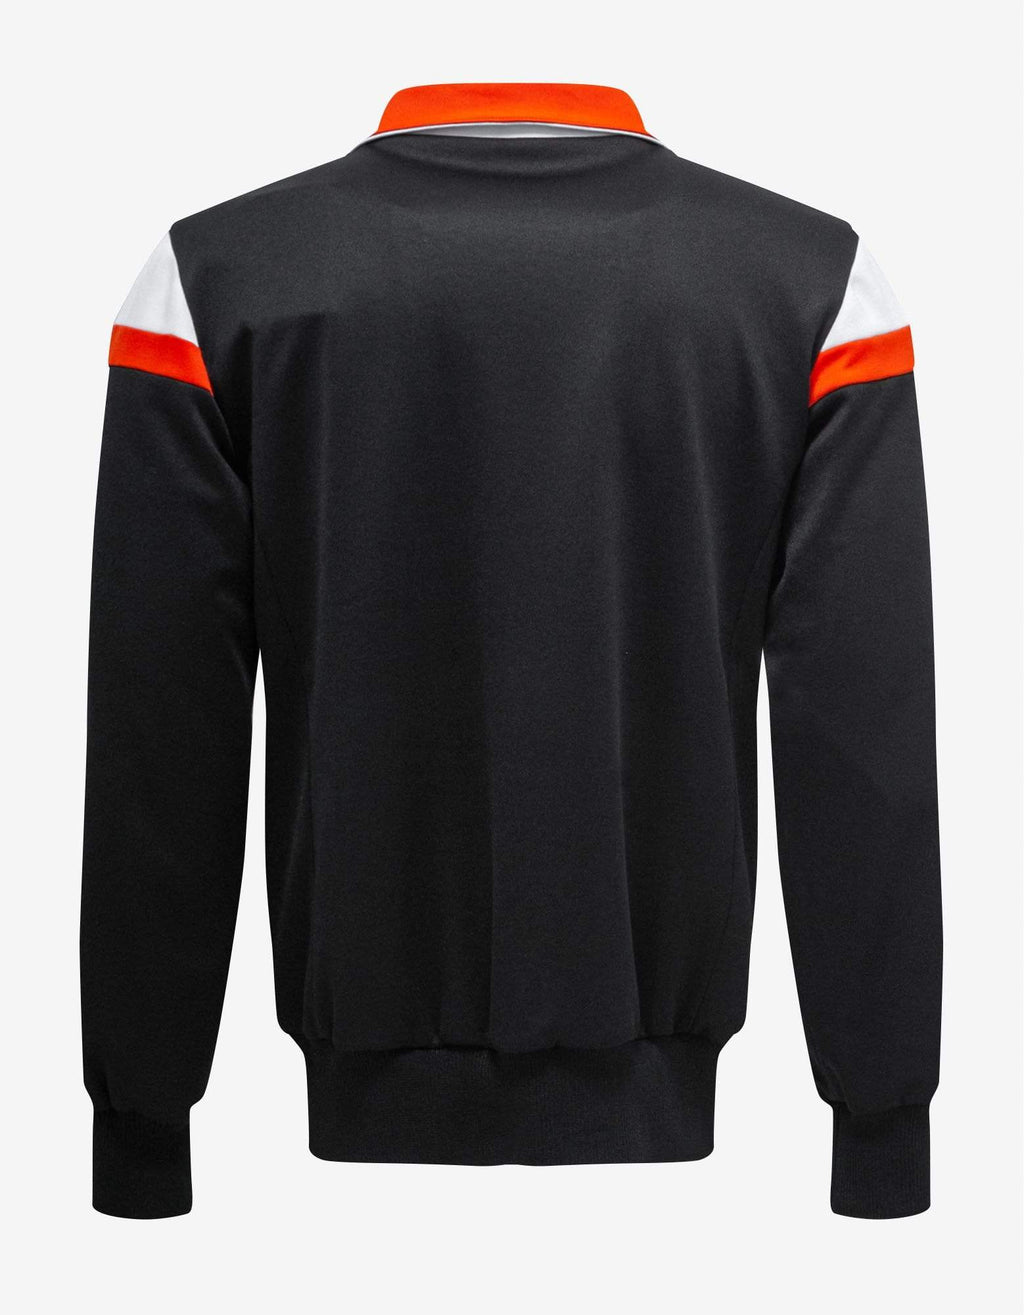 Valentino Black Track Jacket with Orange Stripes